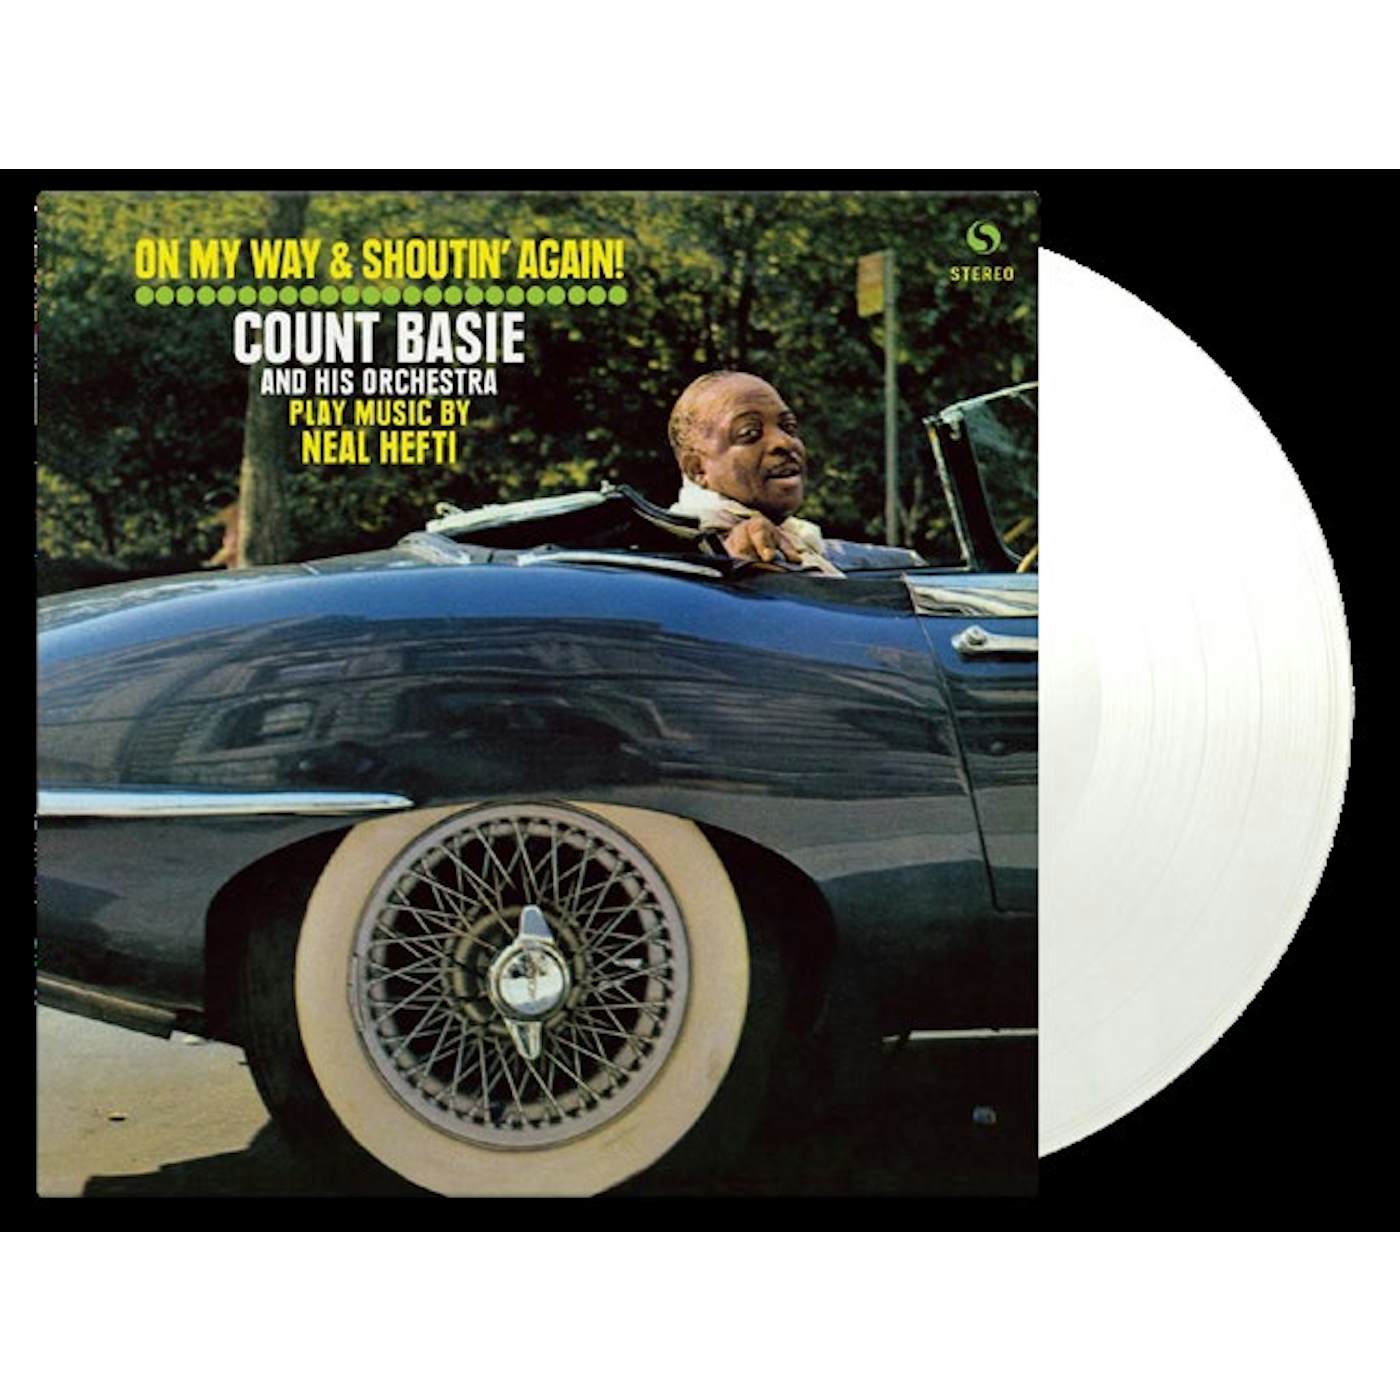 Count Basie ON MY WAY & SHOUNTIN' AGAIN Vinyl Record